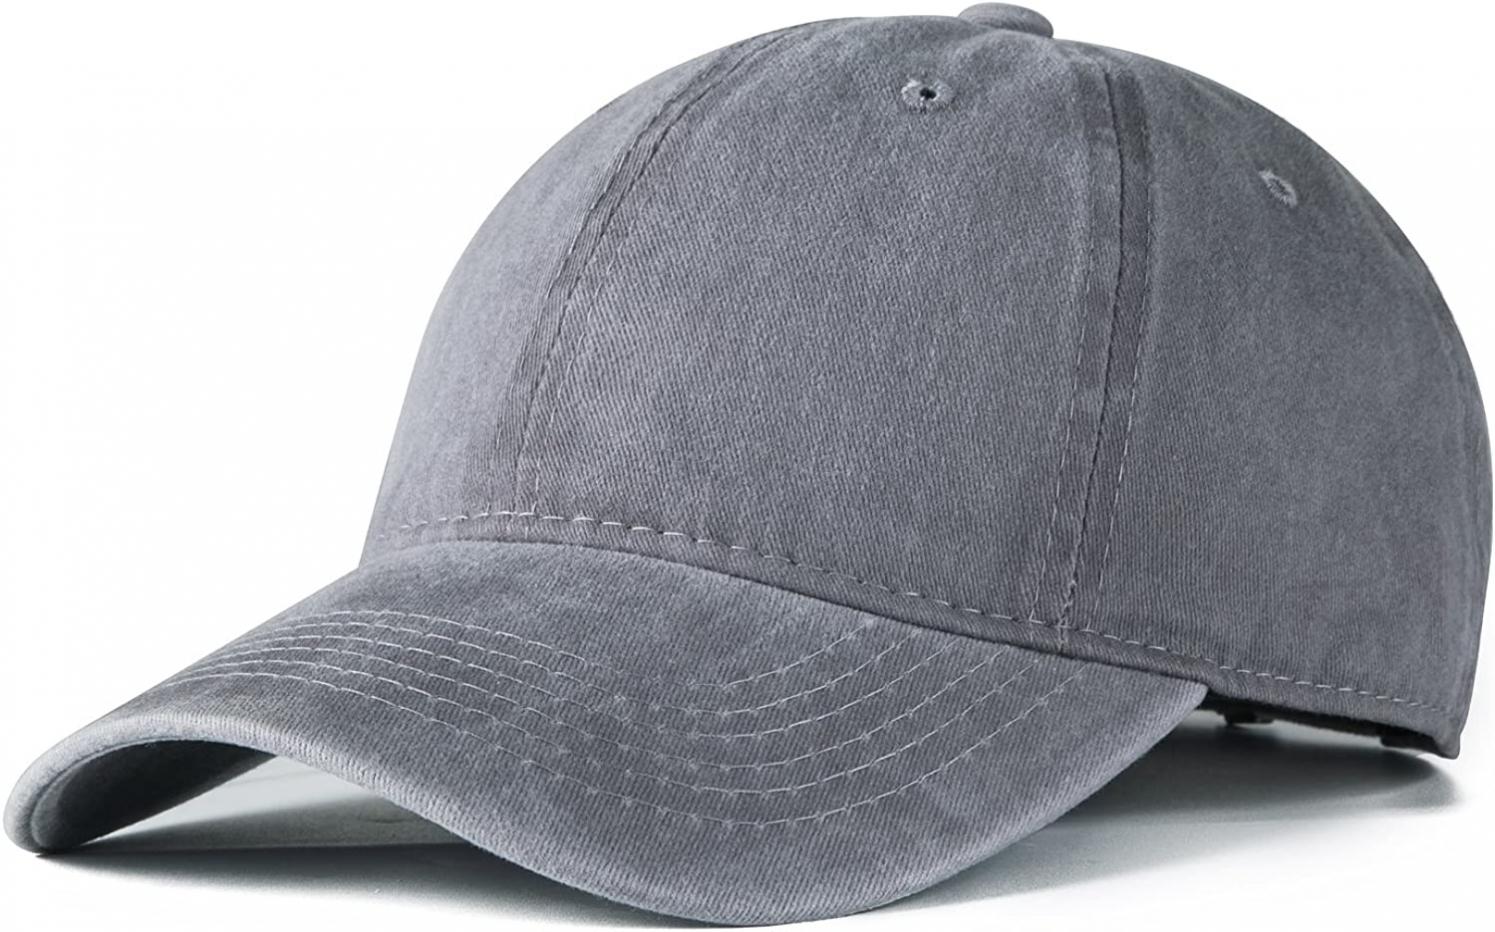 Edoneery Men Women Plain Cotton Adjustable Washed Twill Low Profile Baseball Cap Hat(A1008)